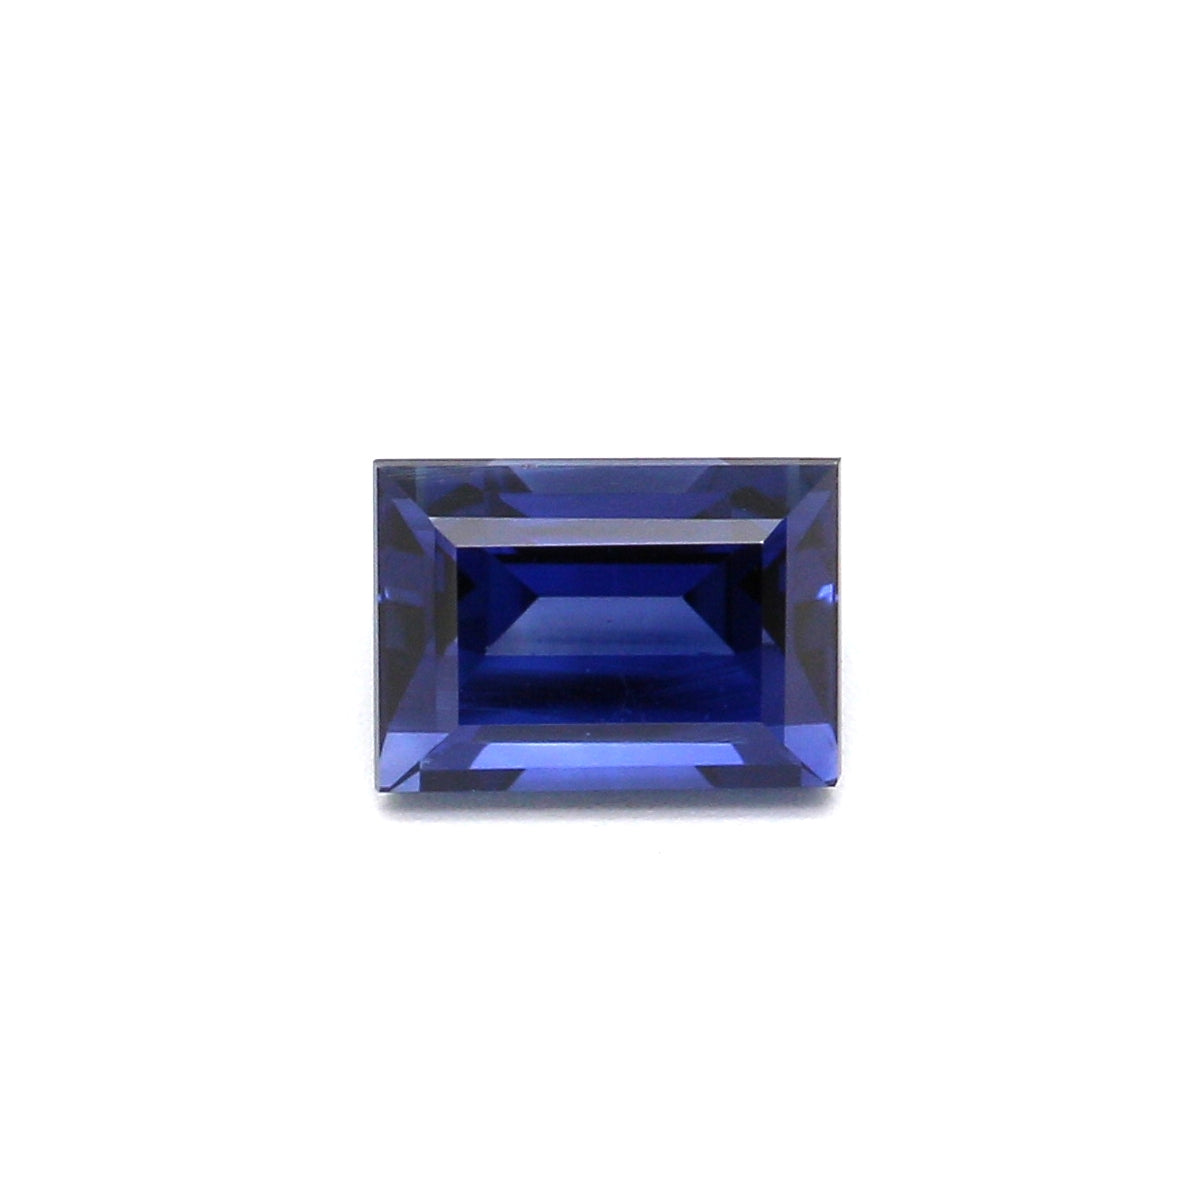 0.66ct Blue Baguette Sapphire, Heated, Thailand - 5.14 x 3.68 x 3.14mm